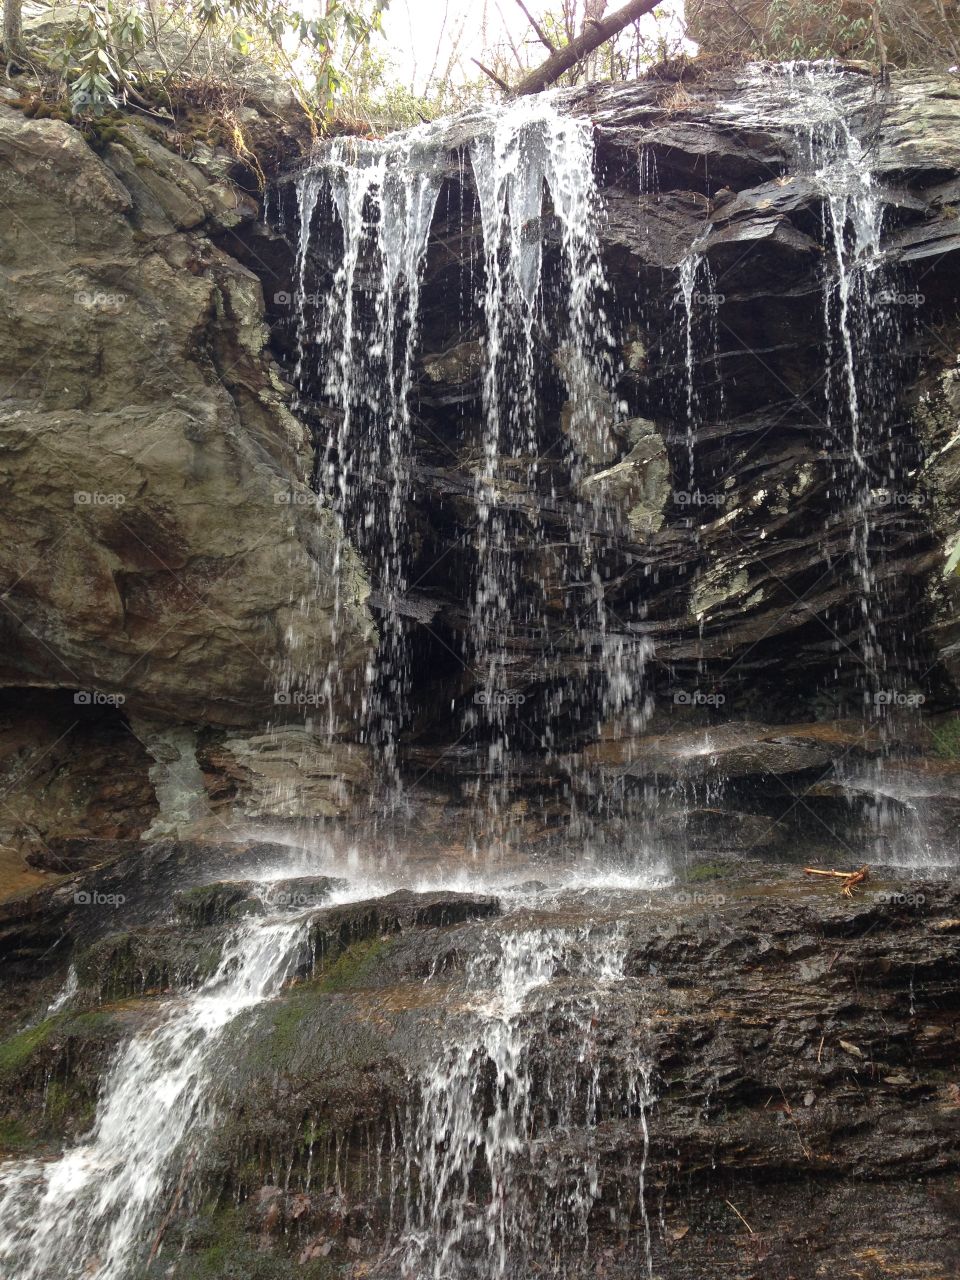 Stokes County Waterfall